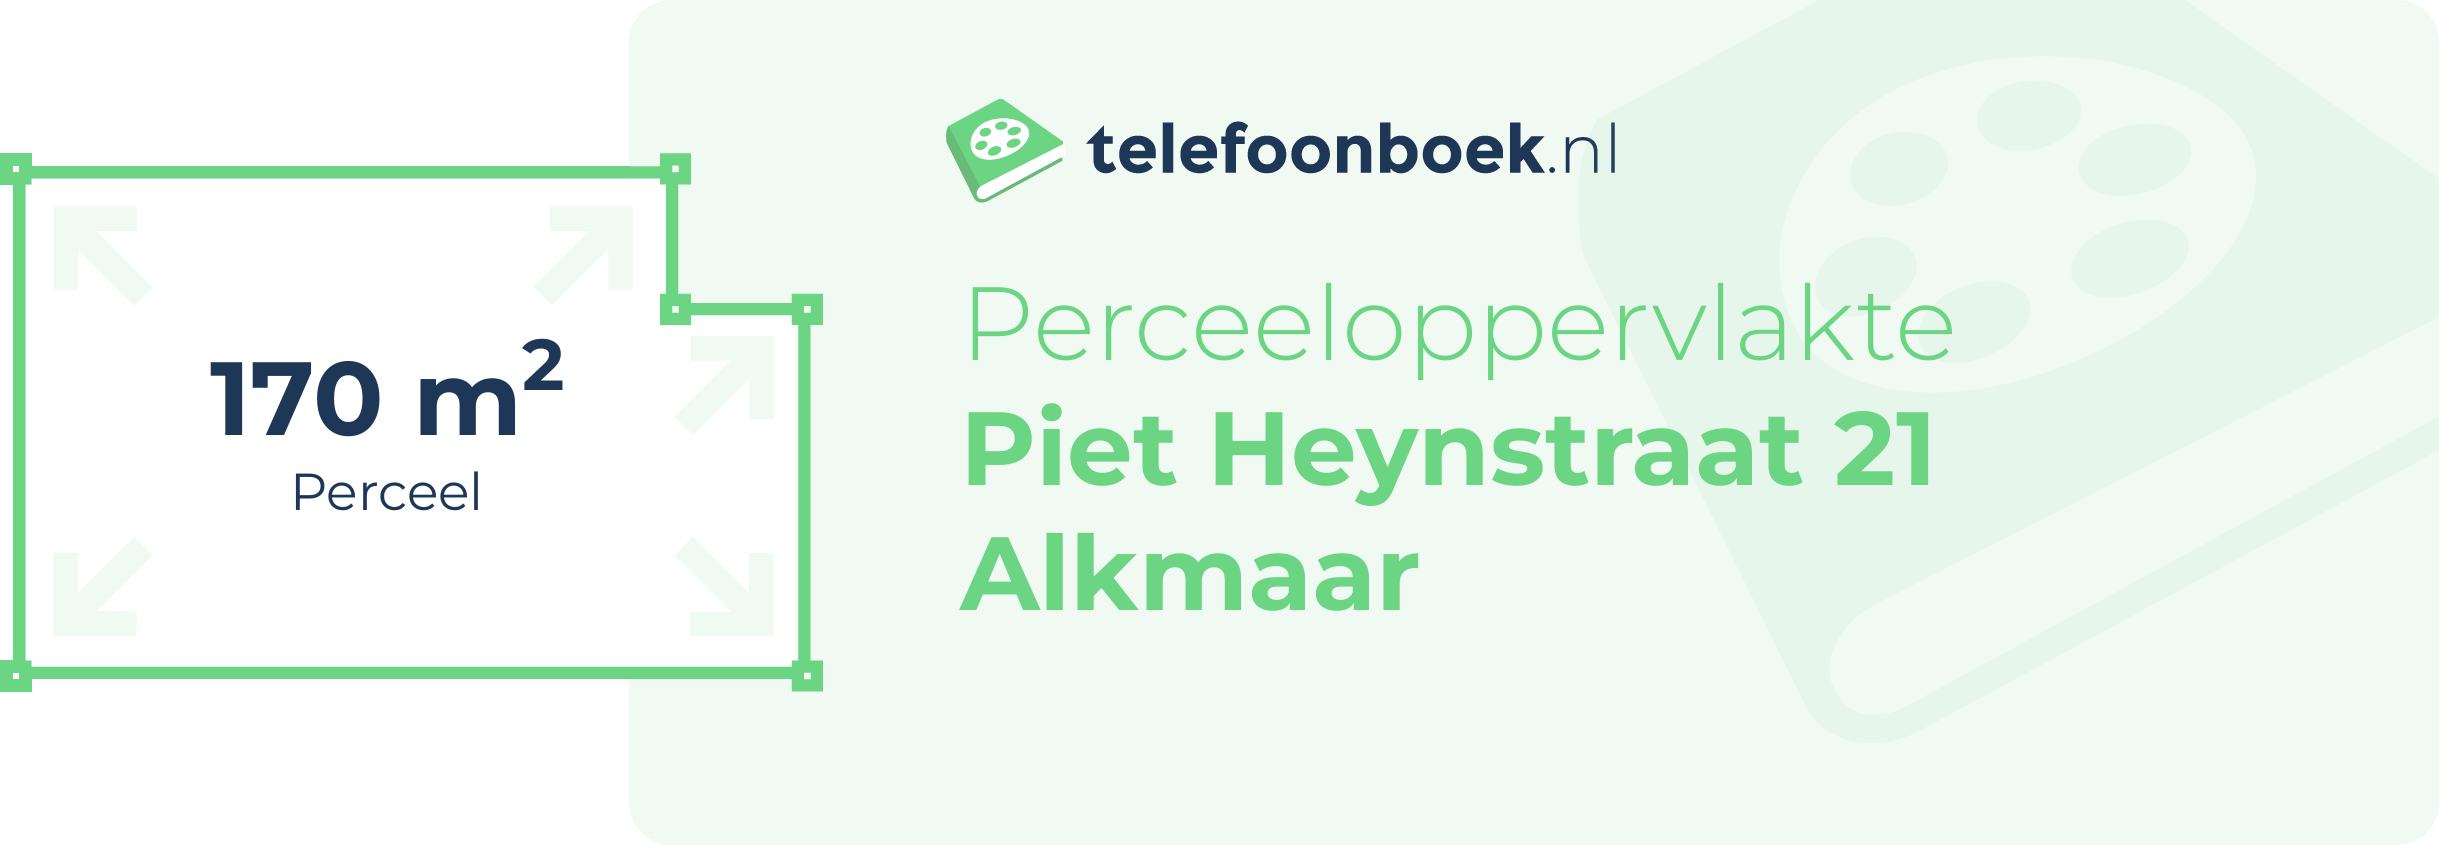 Perceeloppervlakte Piet Heynstraat 21 Alkmaar